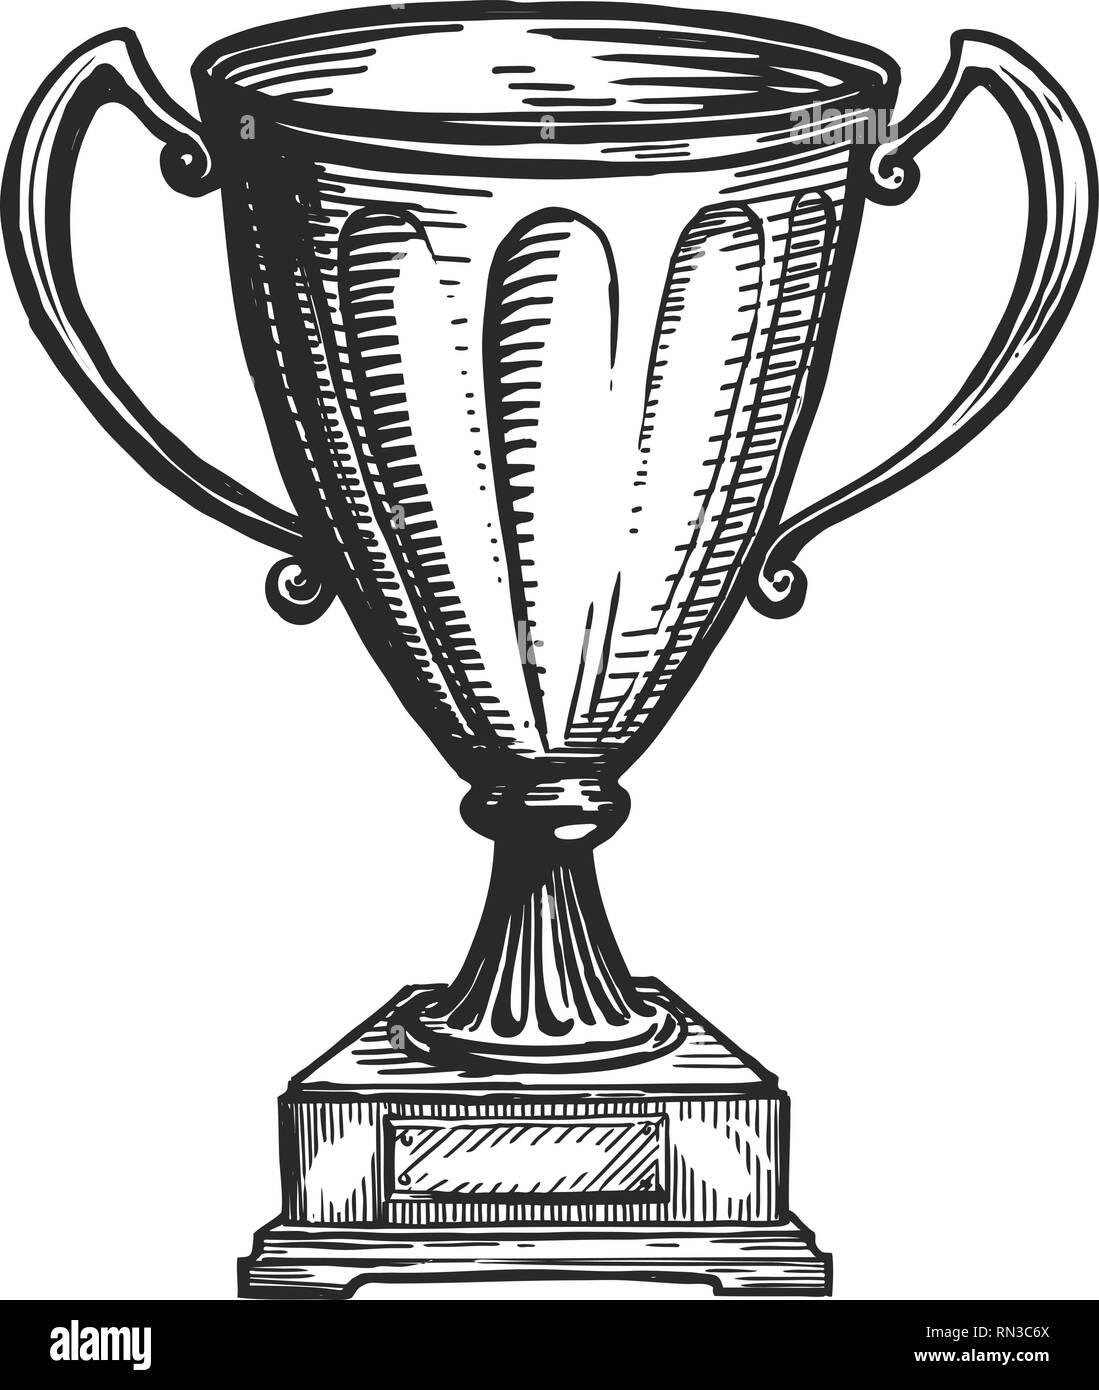 Winner trophy award. Win, winning, champion symbol. Hand drawn sketch vector illustration Stock Vector